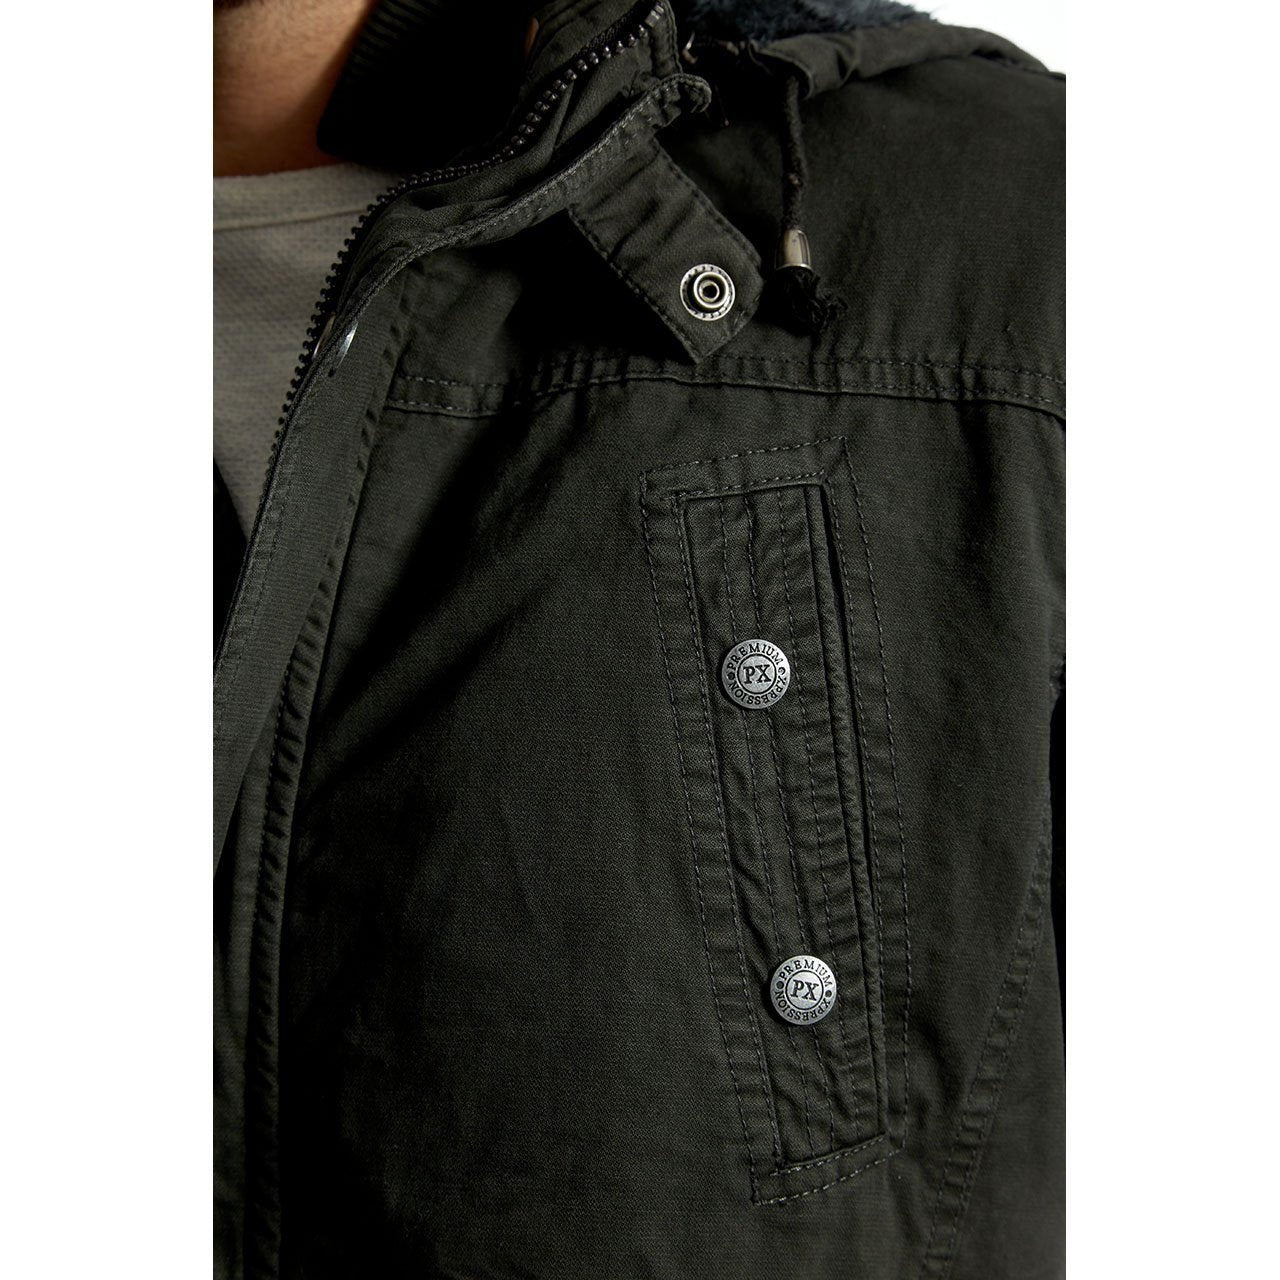 TACVASEN Men's Cotton Jackets Winter Fleece Lined India | Ubuy